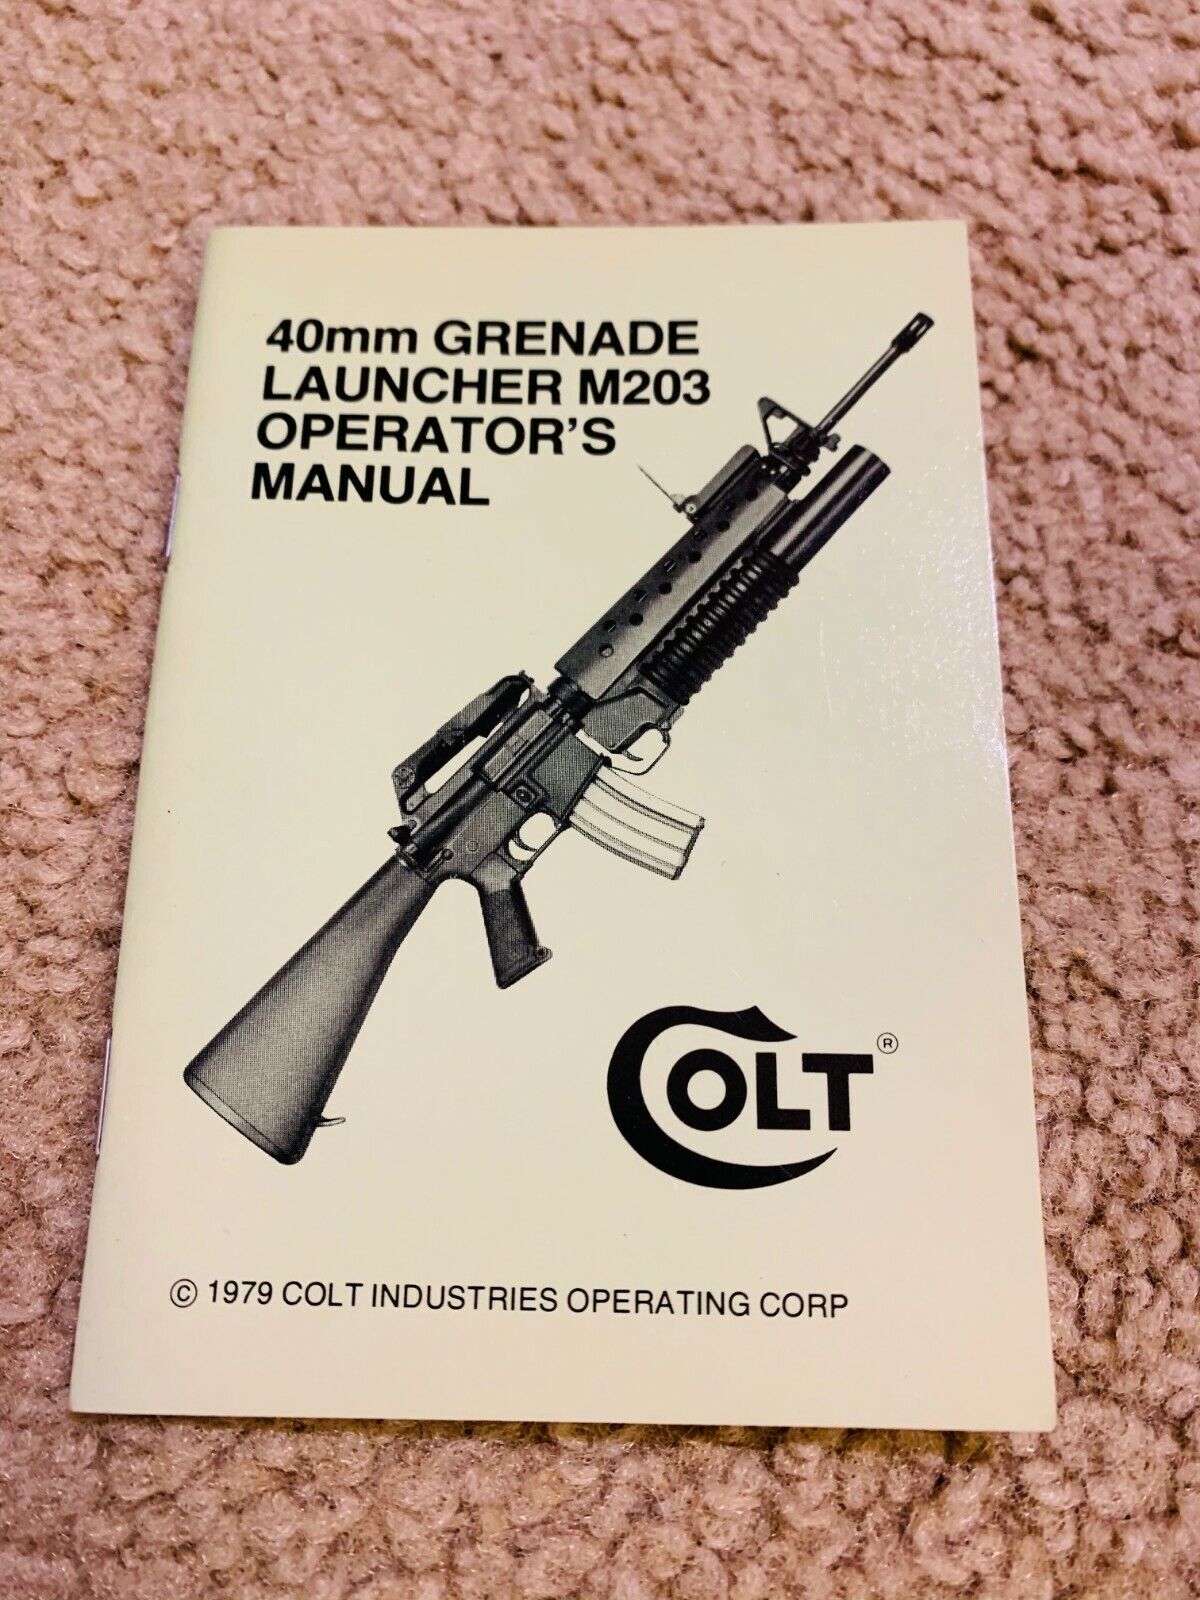 Original new old stock Colt 40MM Grenade Launcher M203 Operator's Manual 